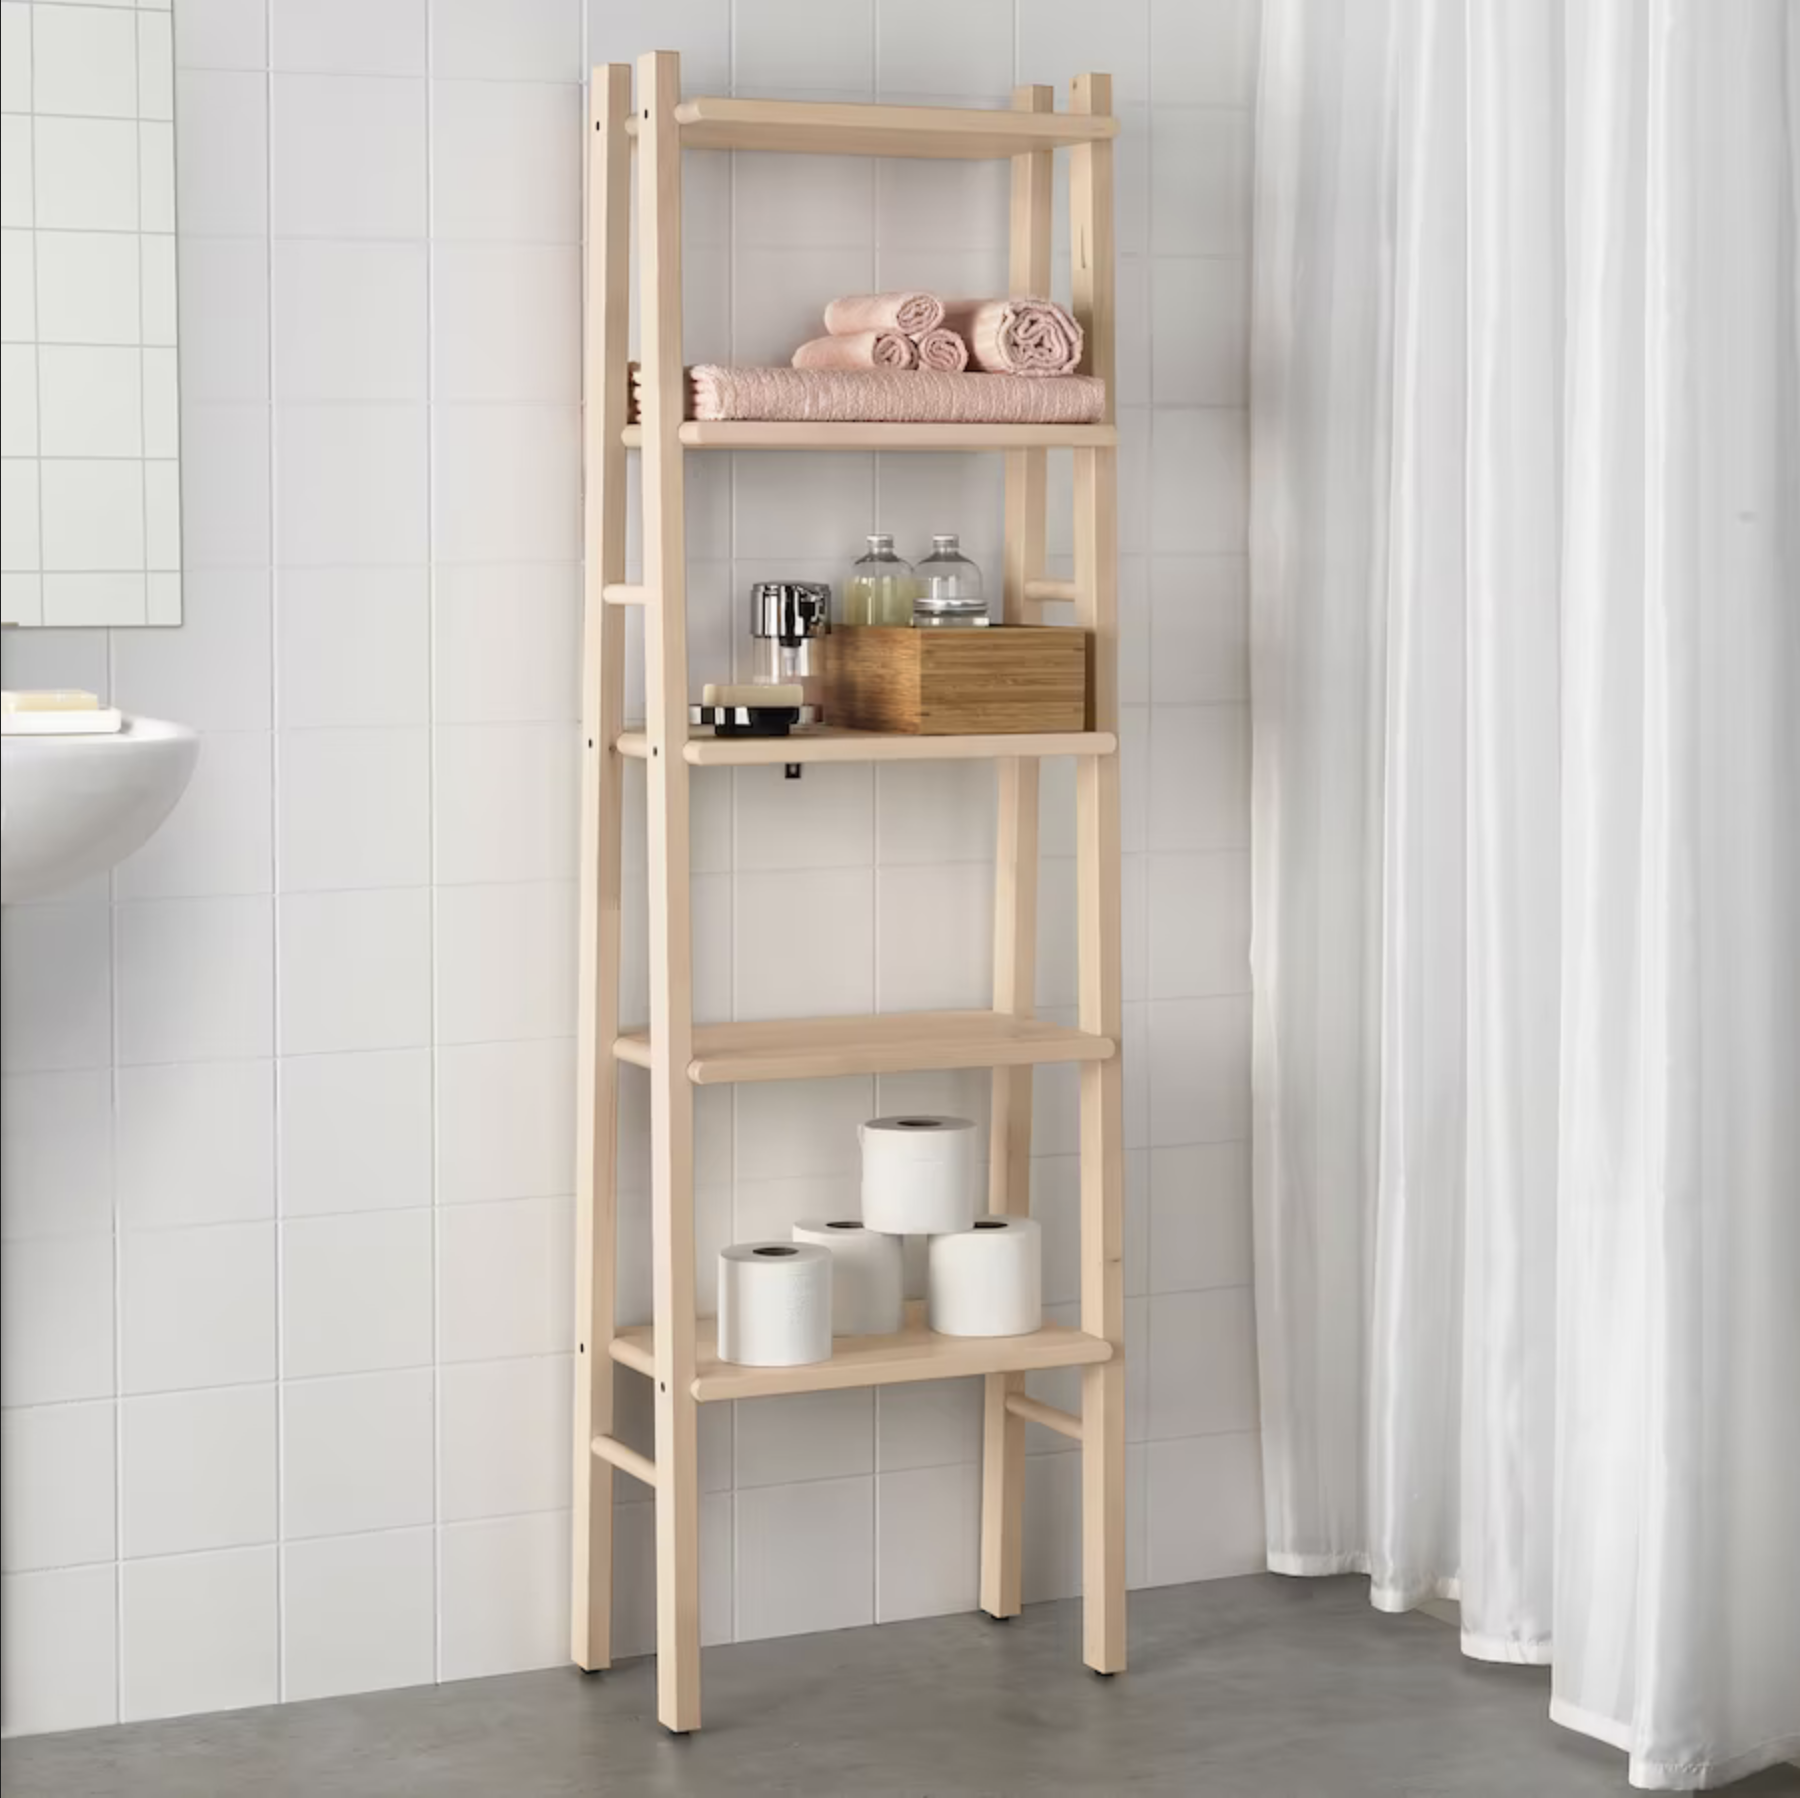 Baño pequeño con estantería VILTO de abedul de IKEA.